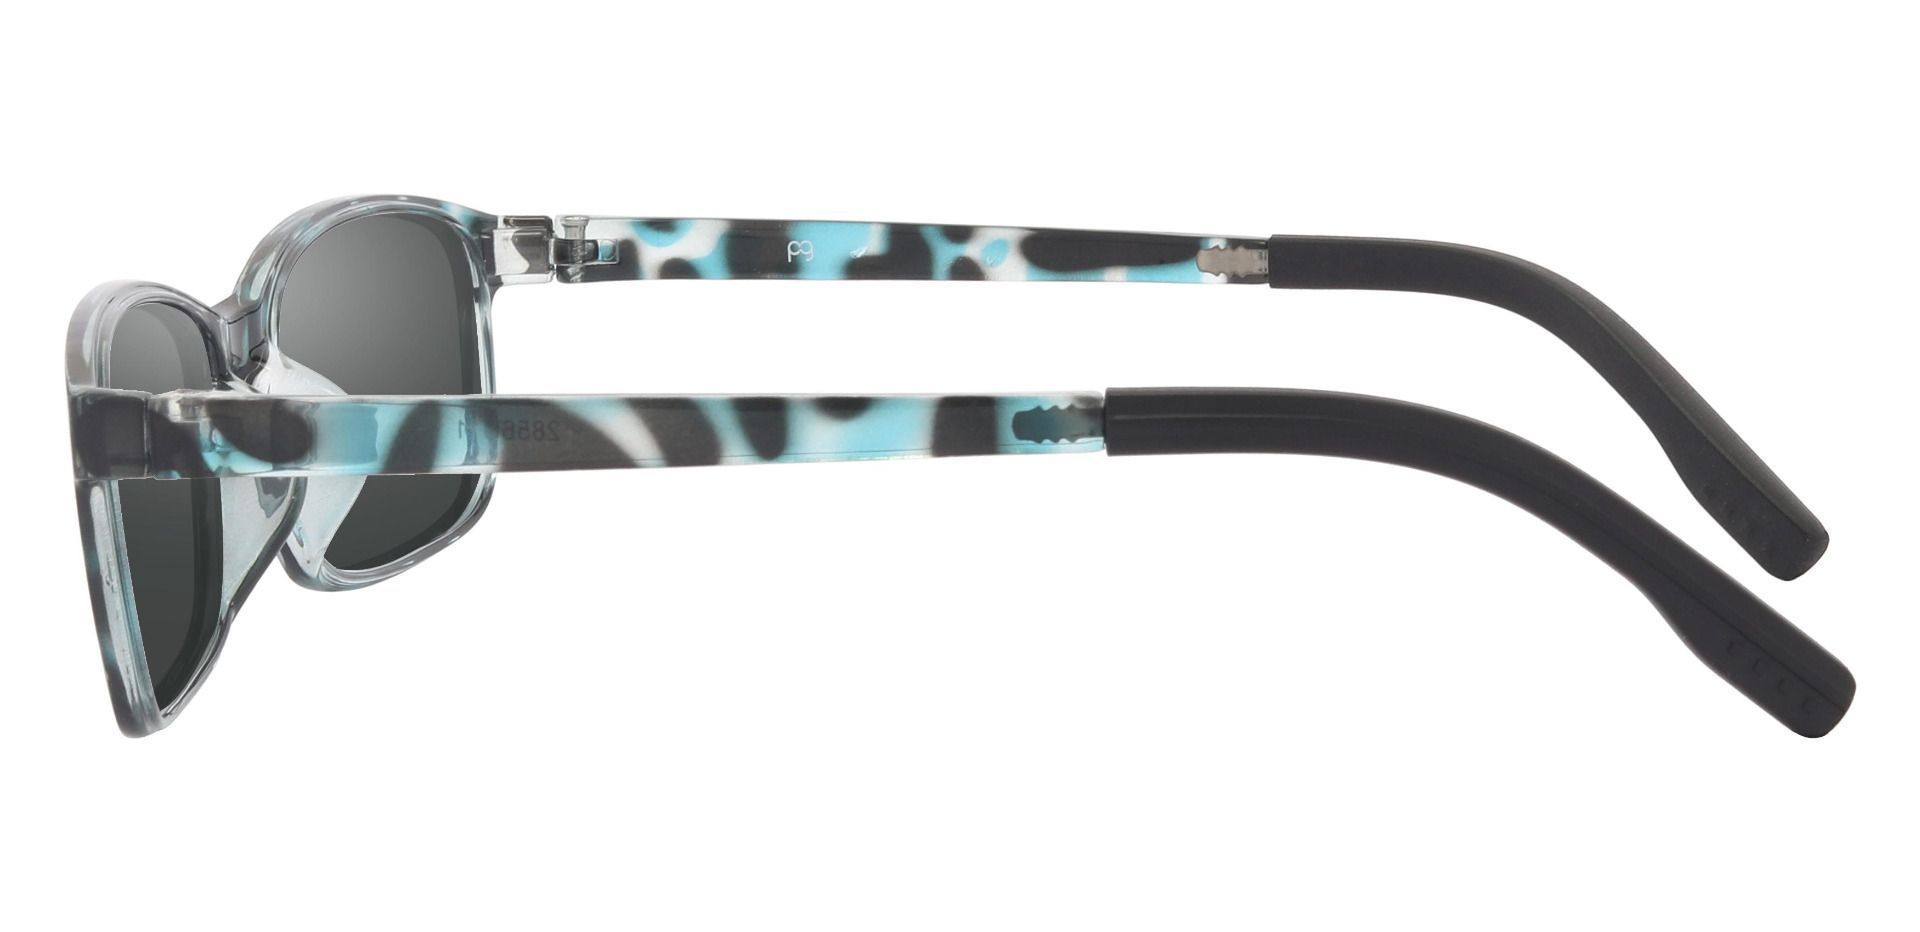 Inman Rectangle Prescription Sunglasses - Multi Color Frame With Gray Lenses